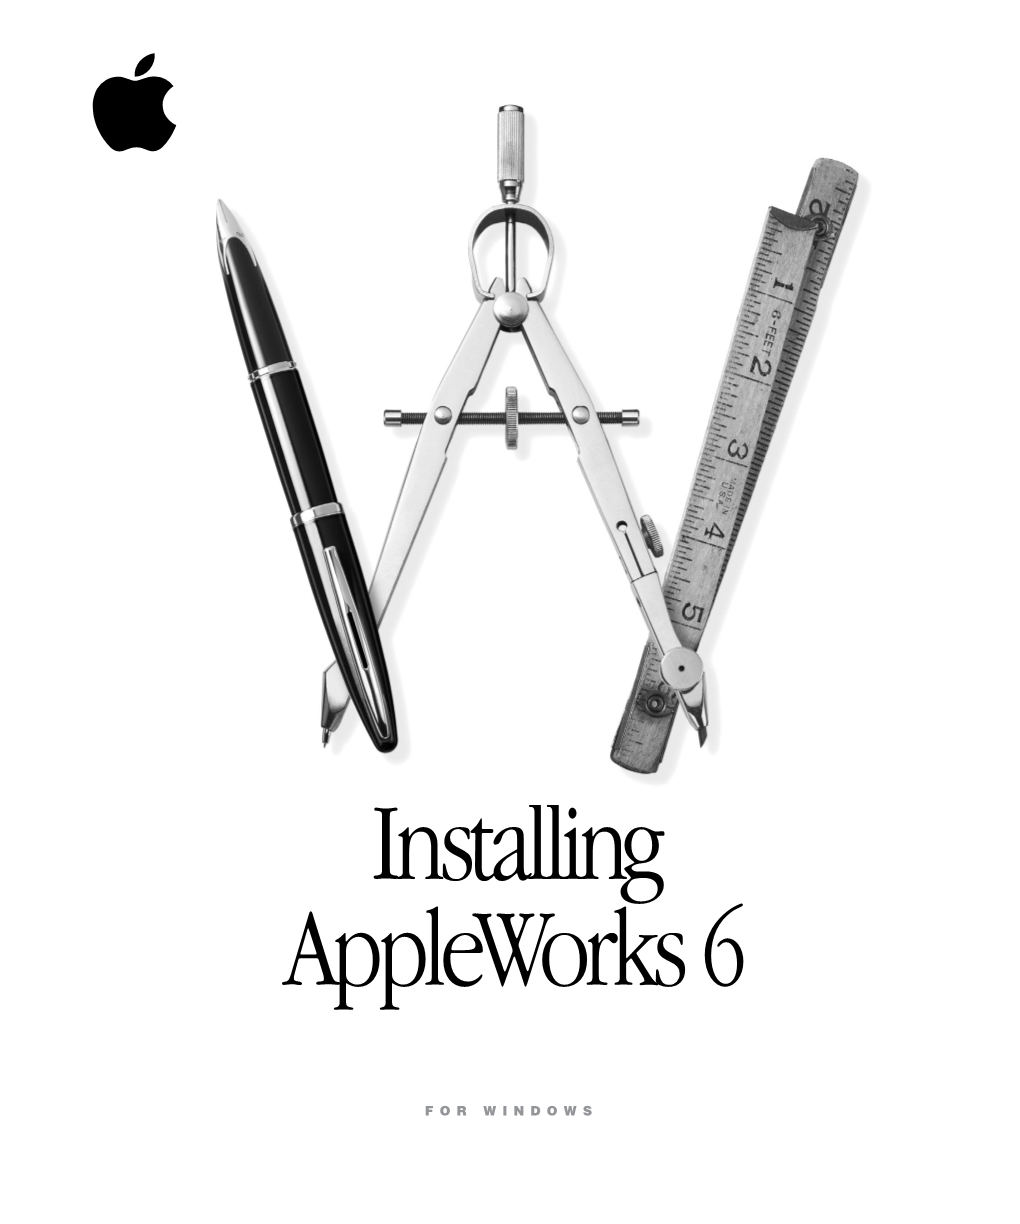 Appleworks 6 for Windows: Installing